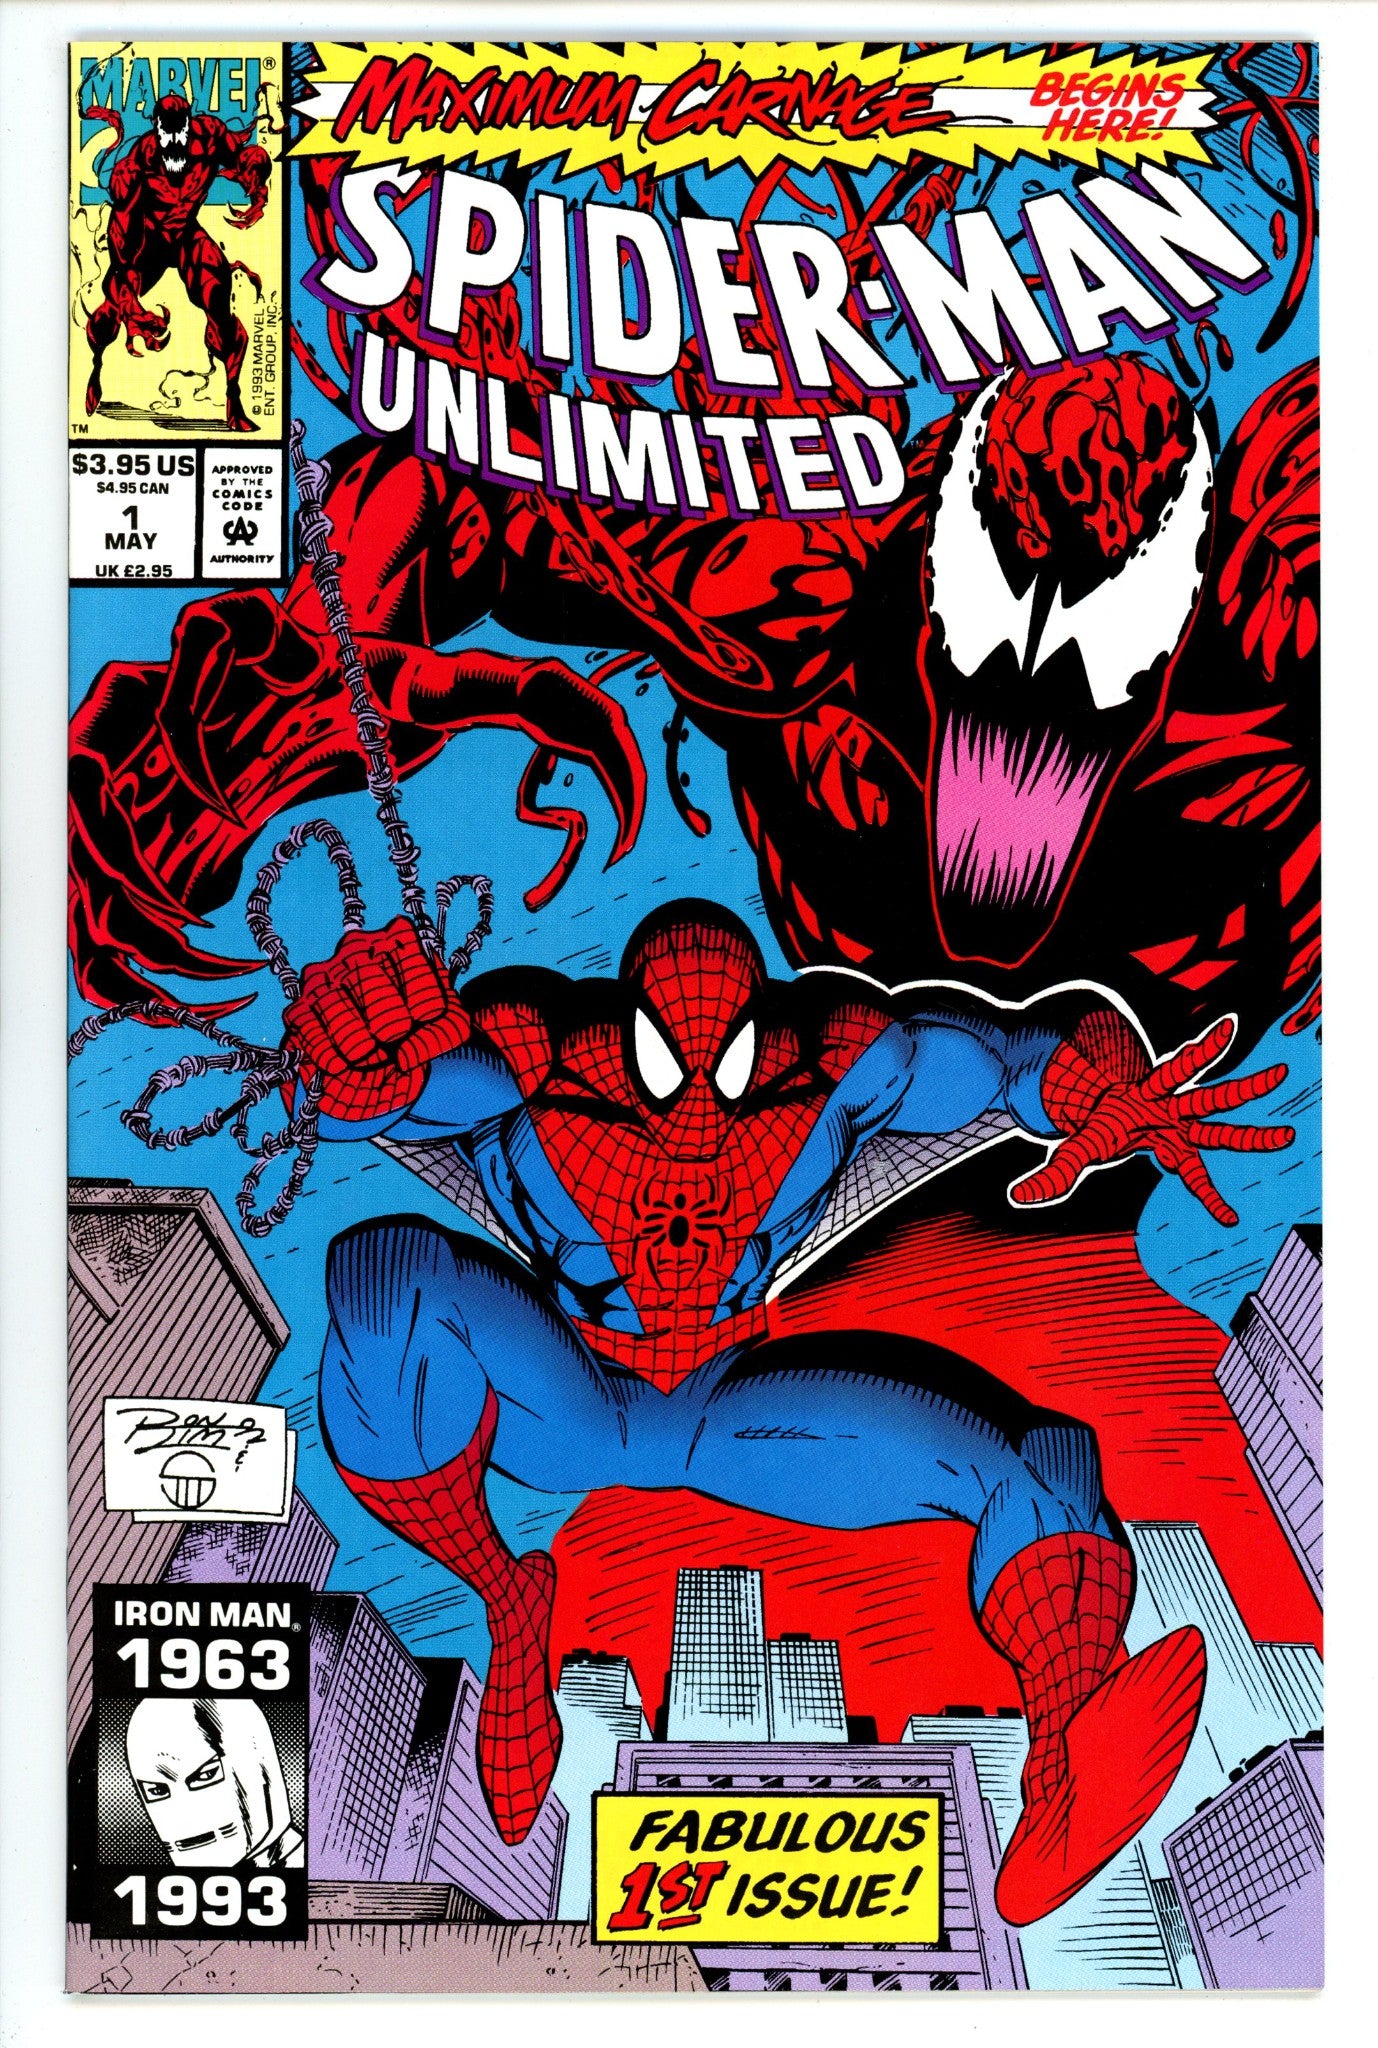 Spider-Man Unlimited Vol 1 1 VF/NM (9.0) (1993) 